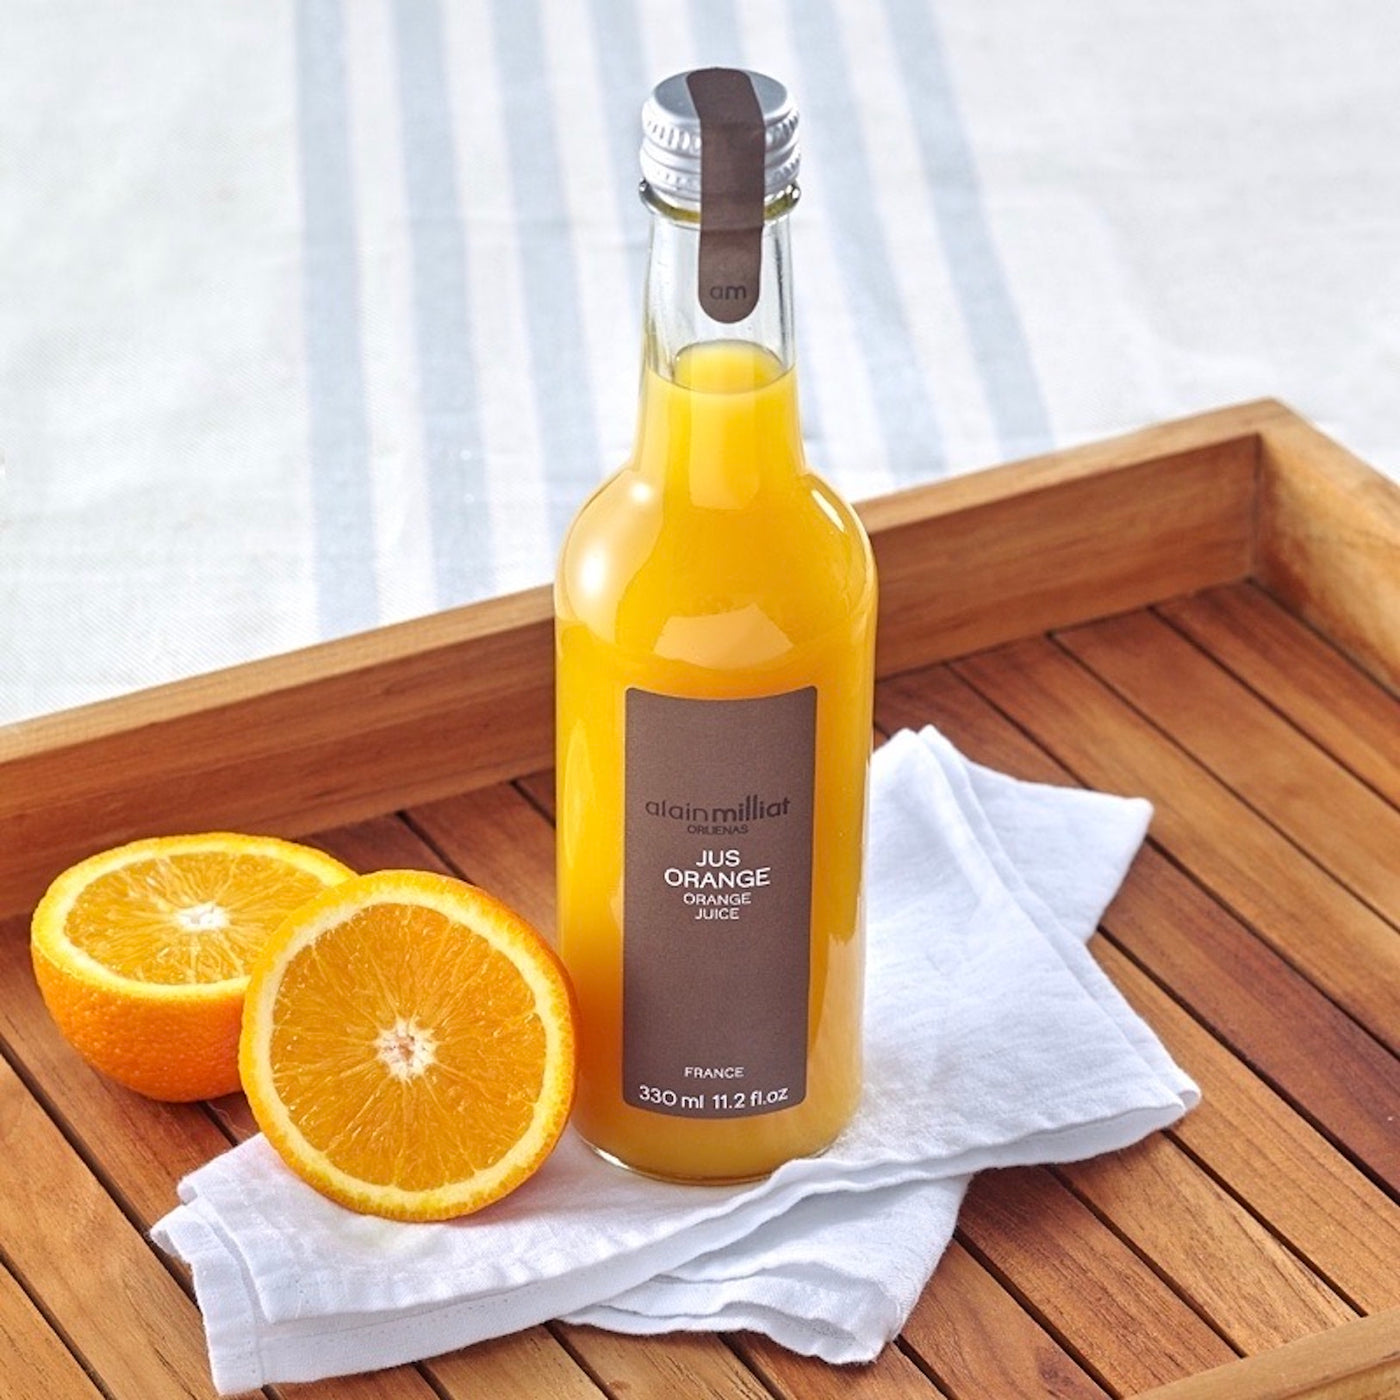 orange-juice-alain-milliat-online-grocery-delivery-thenewgrocer